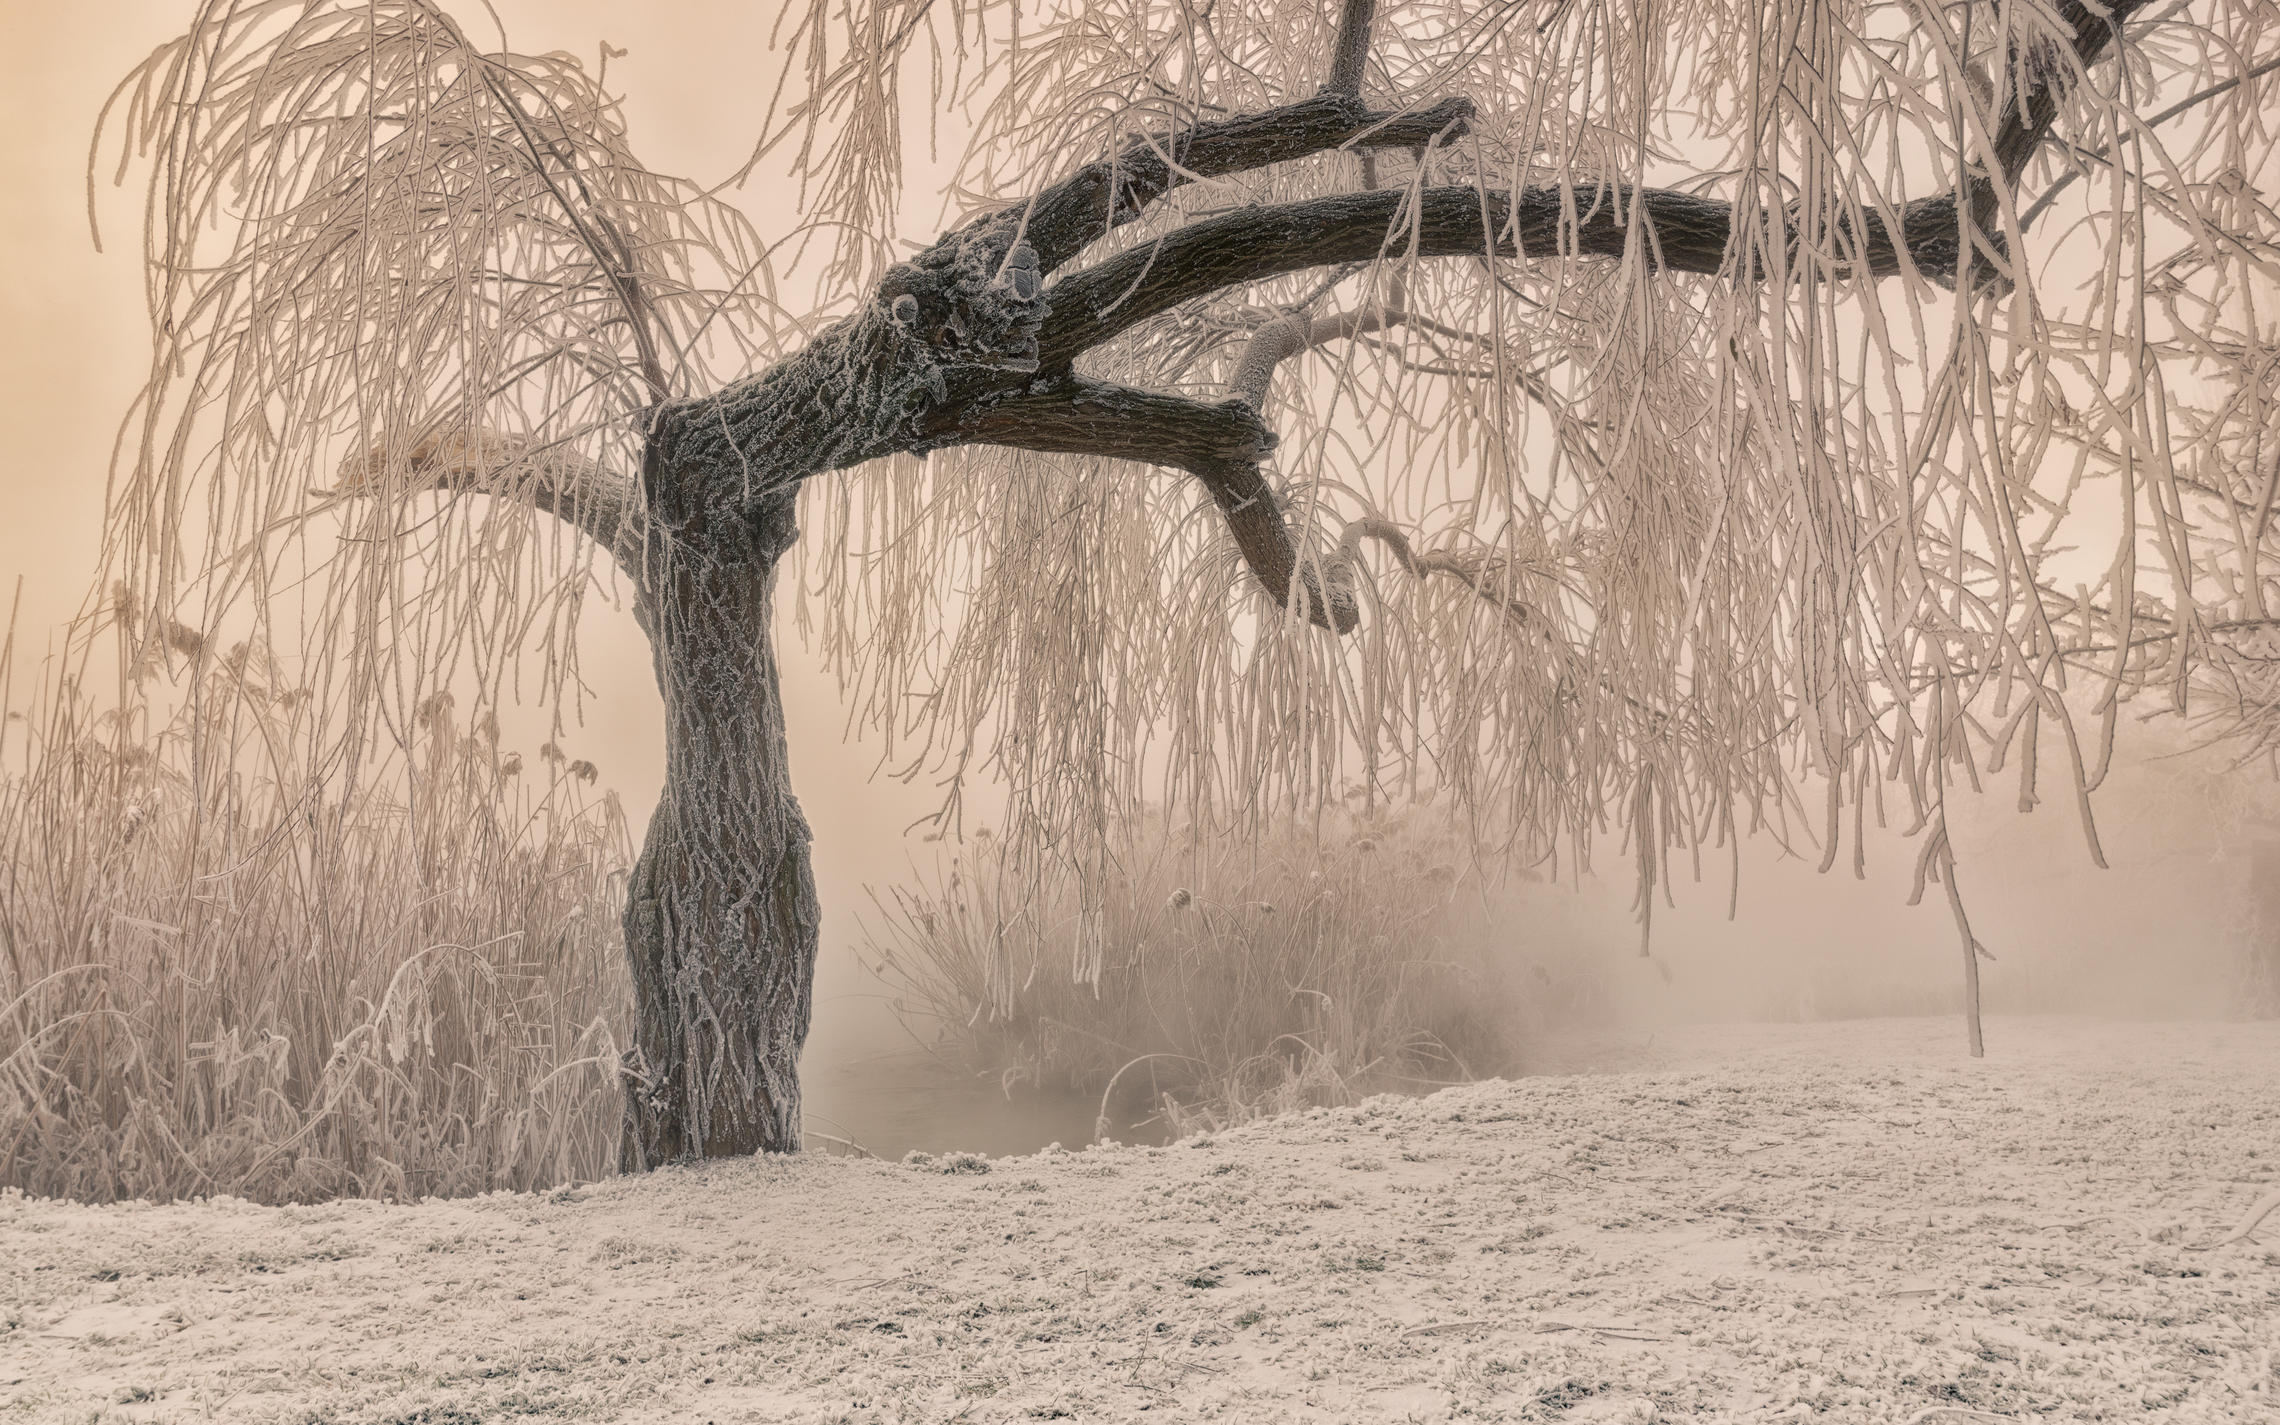 Сильный утренний мороз. Иней на деревьях. Деревья зимой в тумане. Зимний туман. Инопланетные деревья зимние.